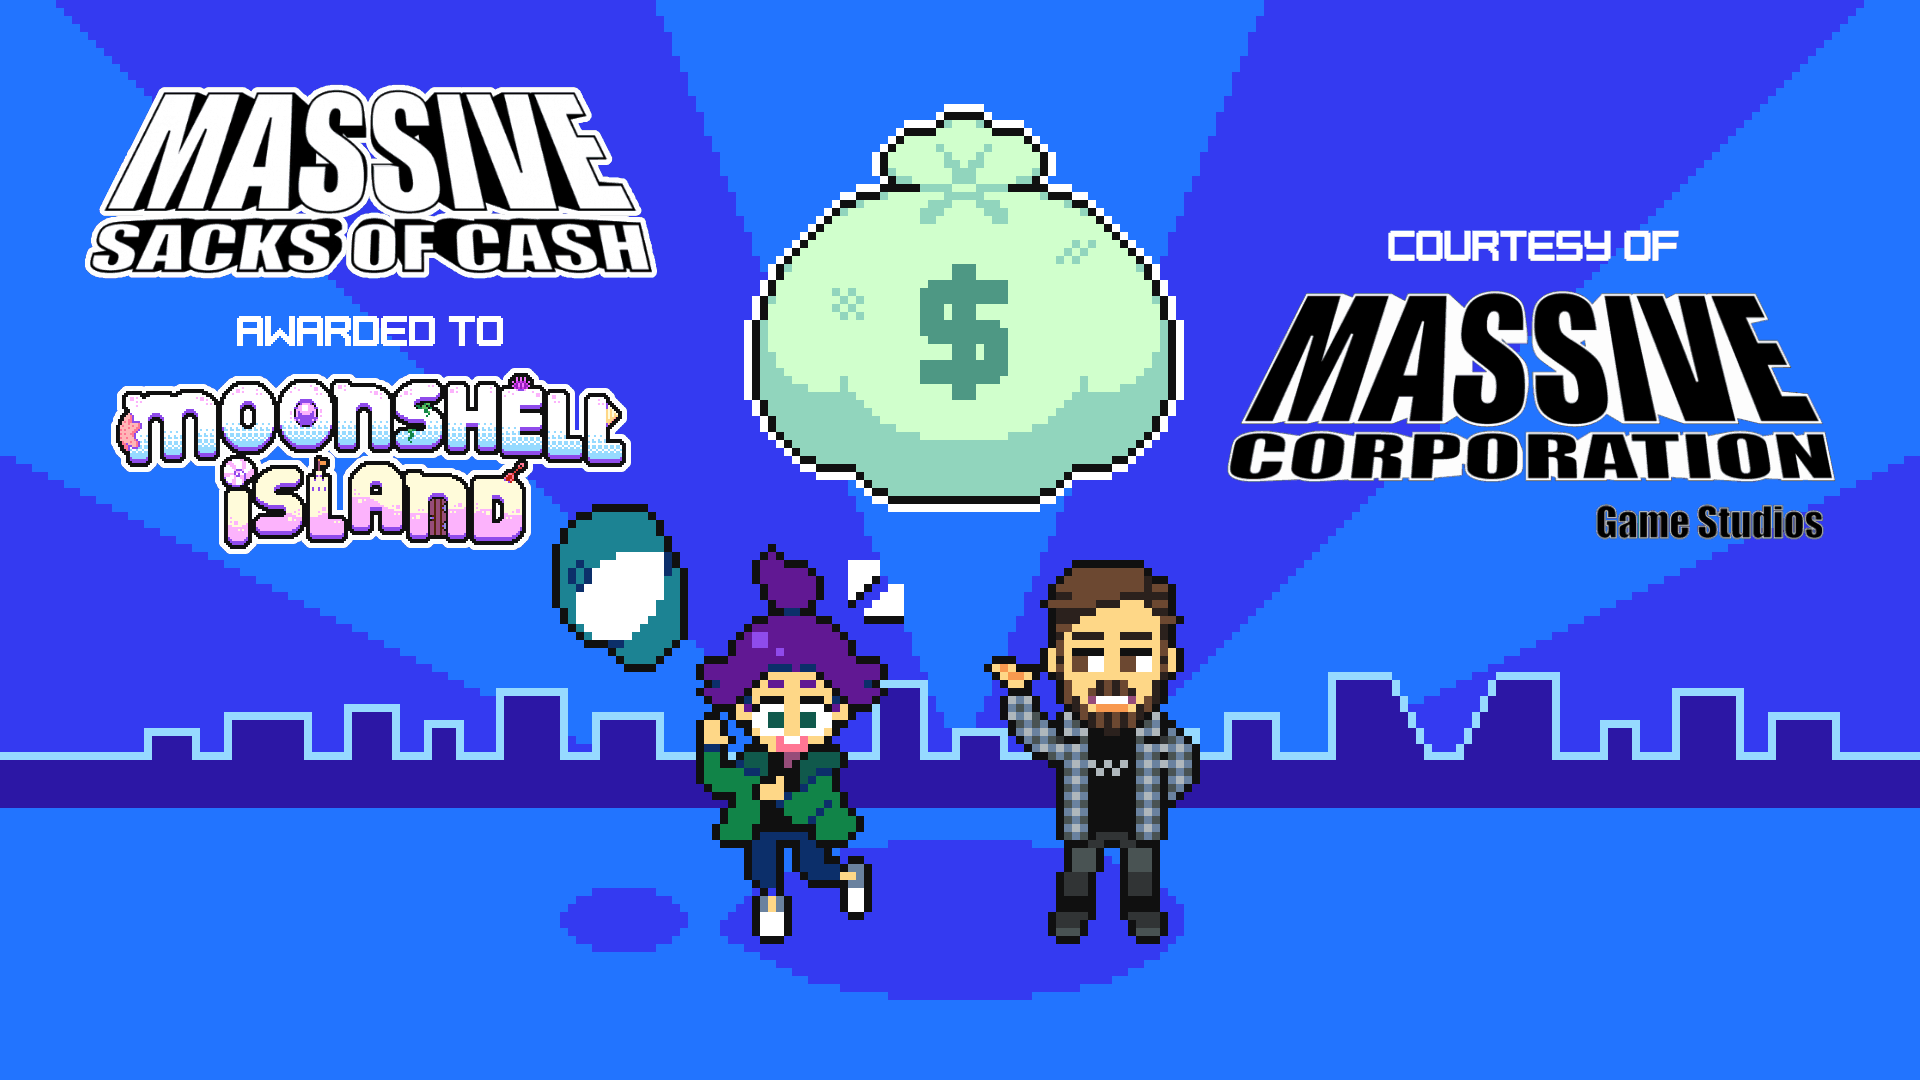 Moonshell Island Receives Massive Sacks of Cash grant from Massive Corporation Game Studios!